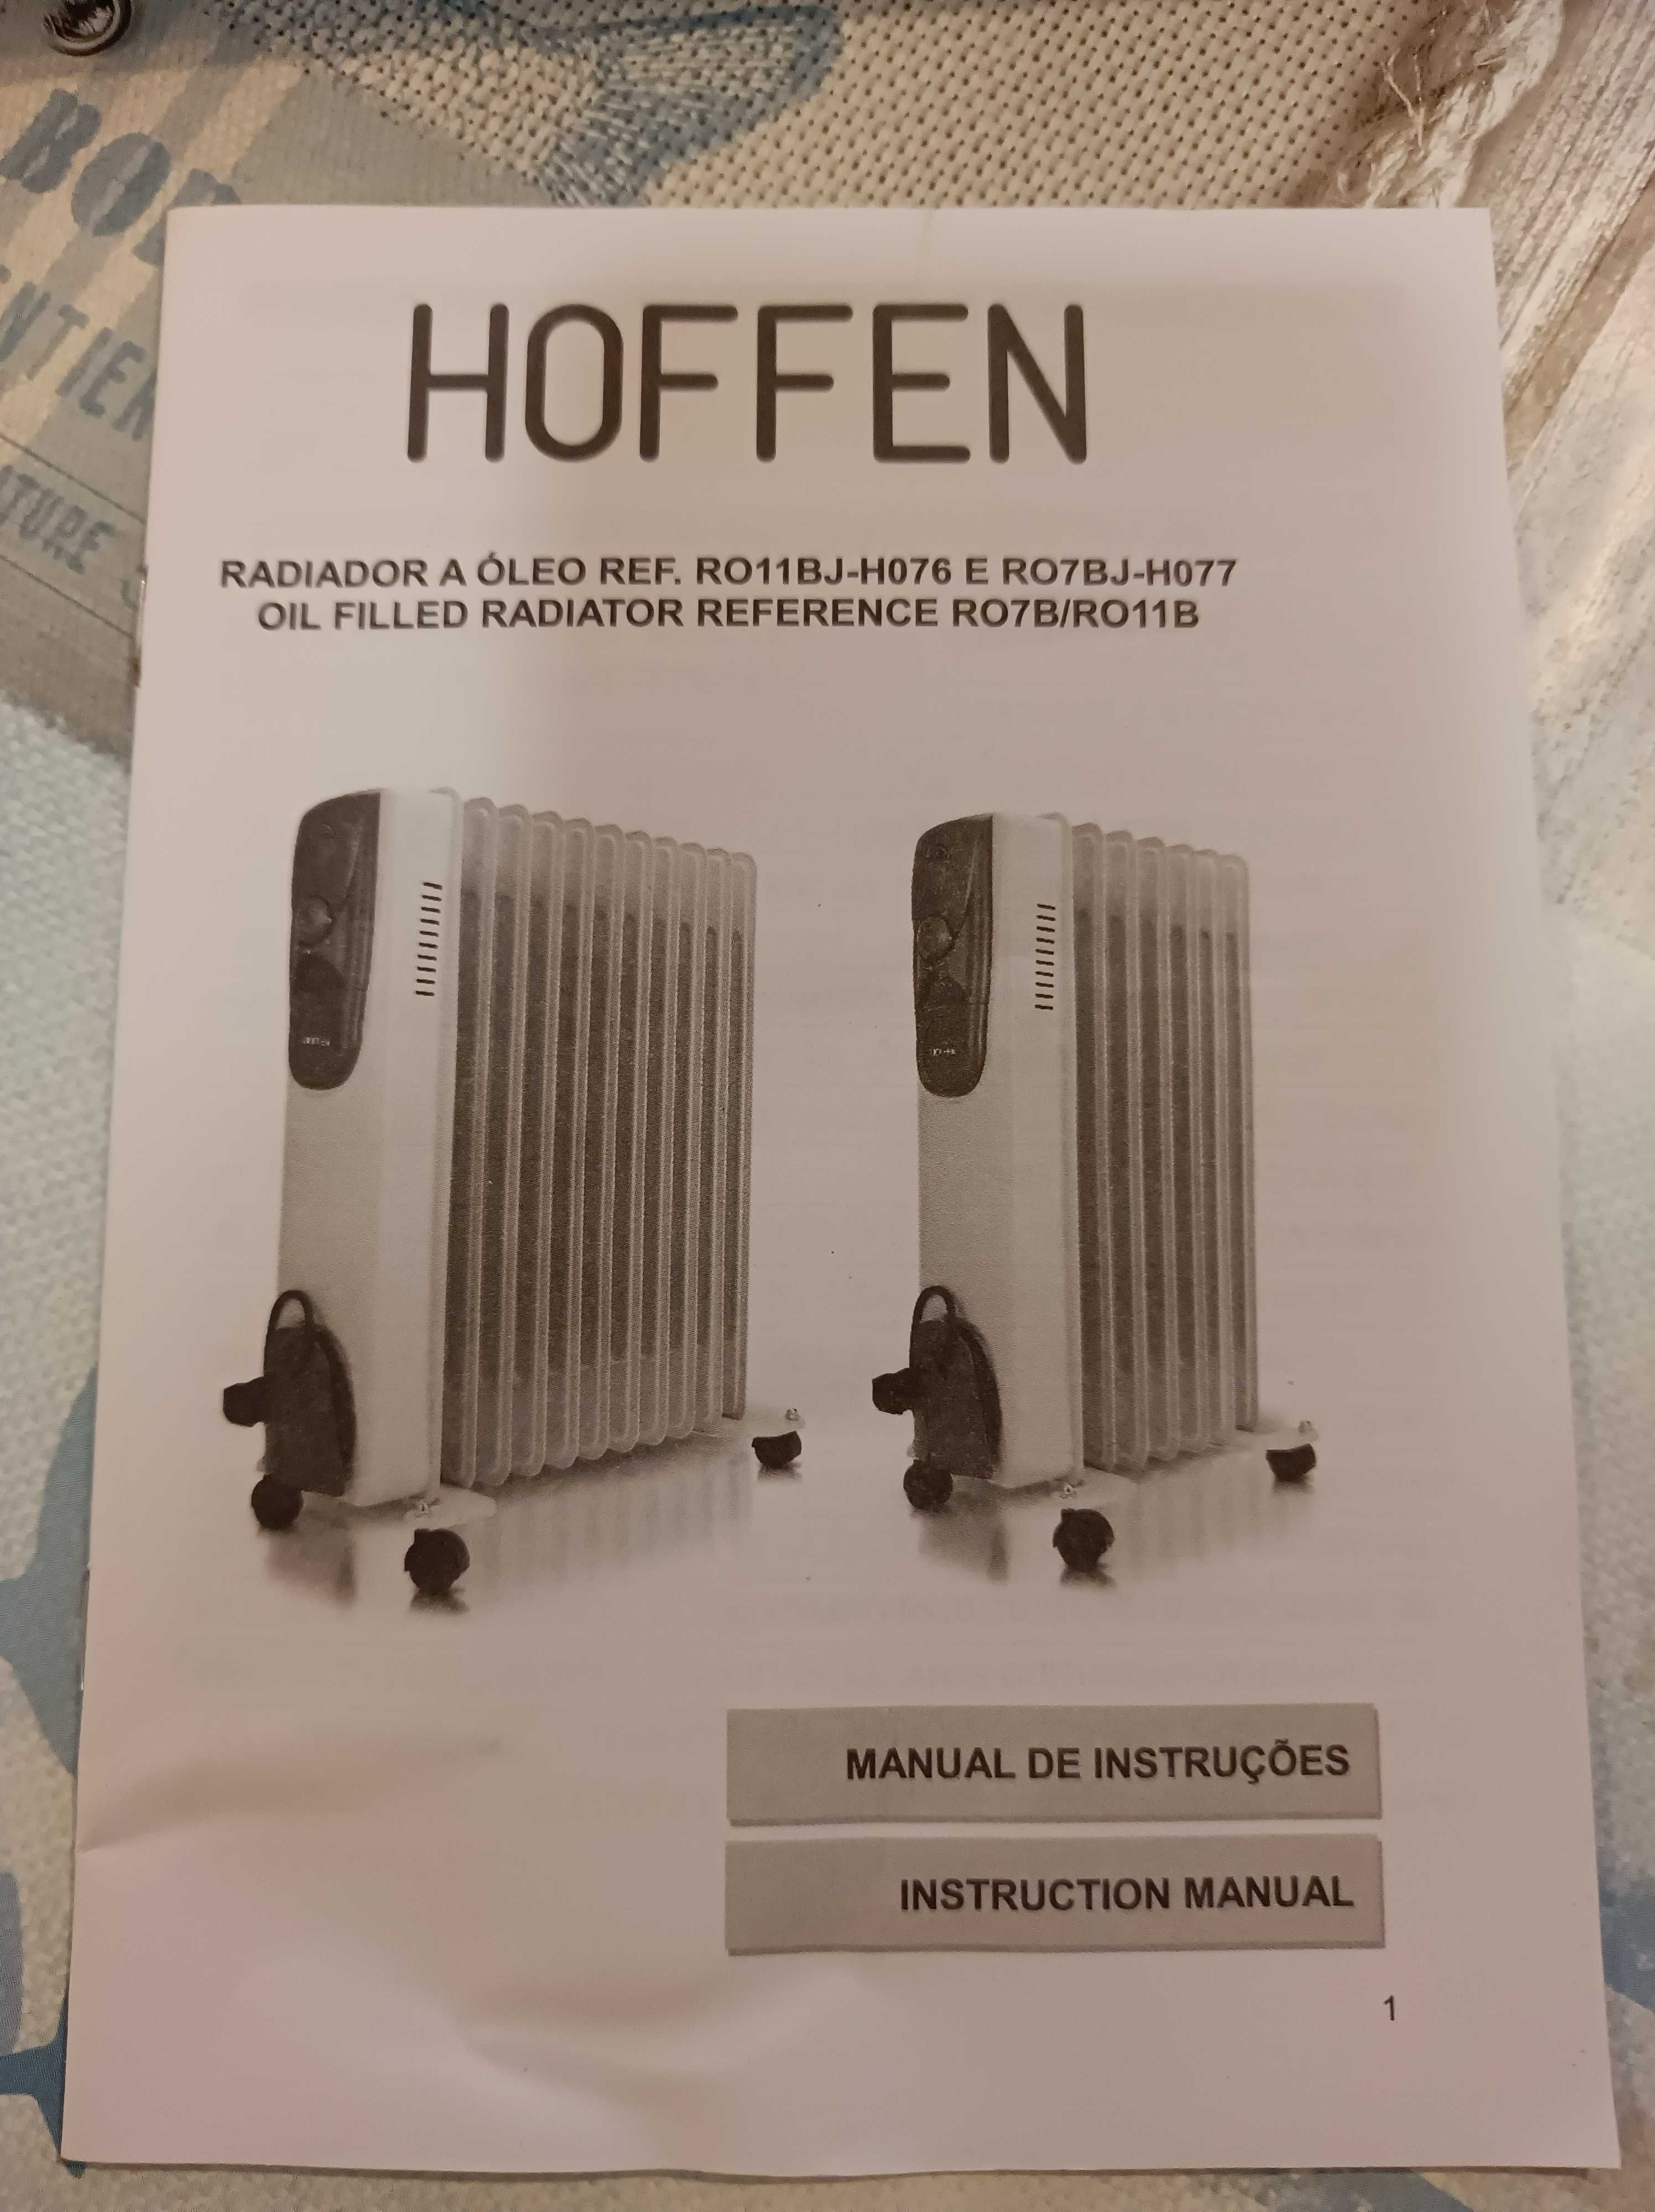 Radiador a óleo Hoffen 2500W - 11 elementos